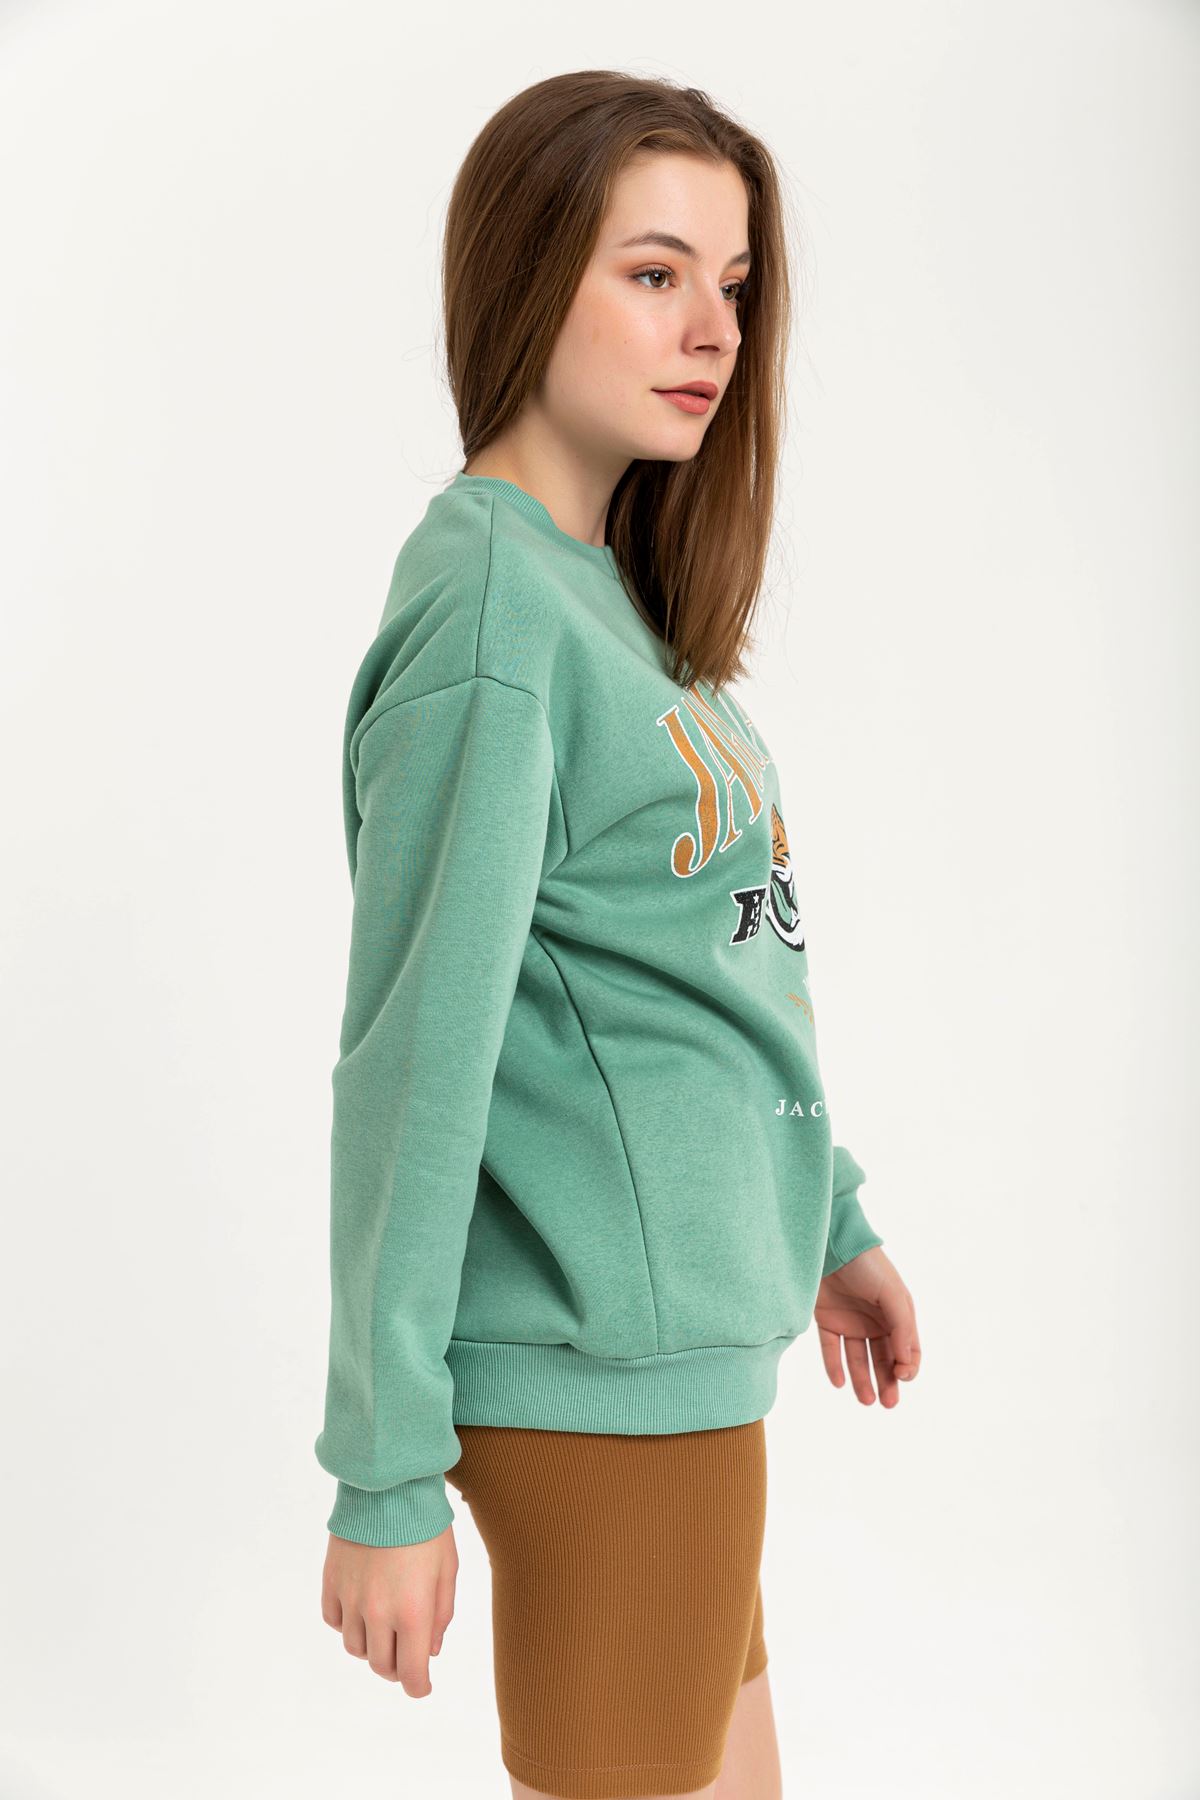 Jesica Fabric Long Sleeve Hooded Oversize Zip Women Sweatshirt - Mint